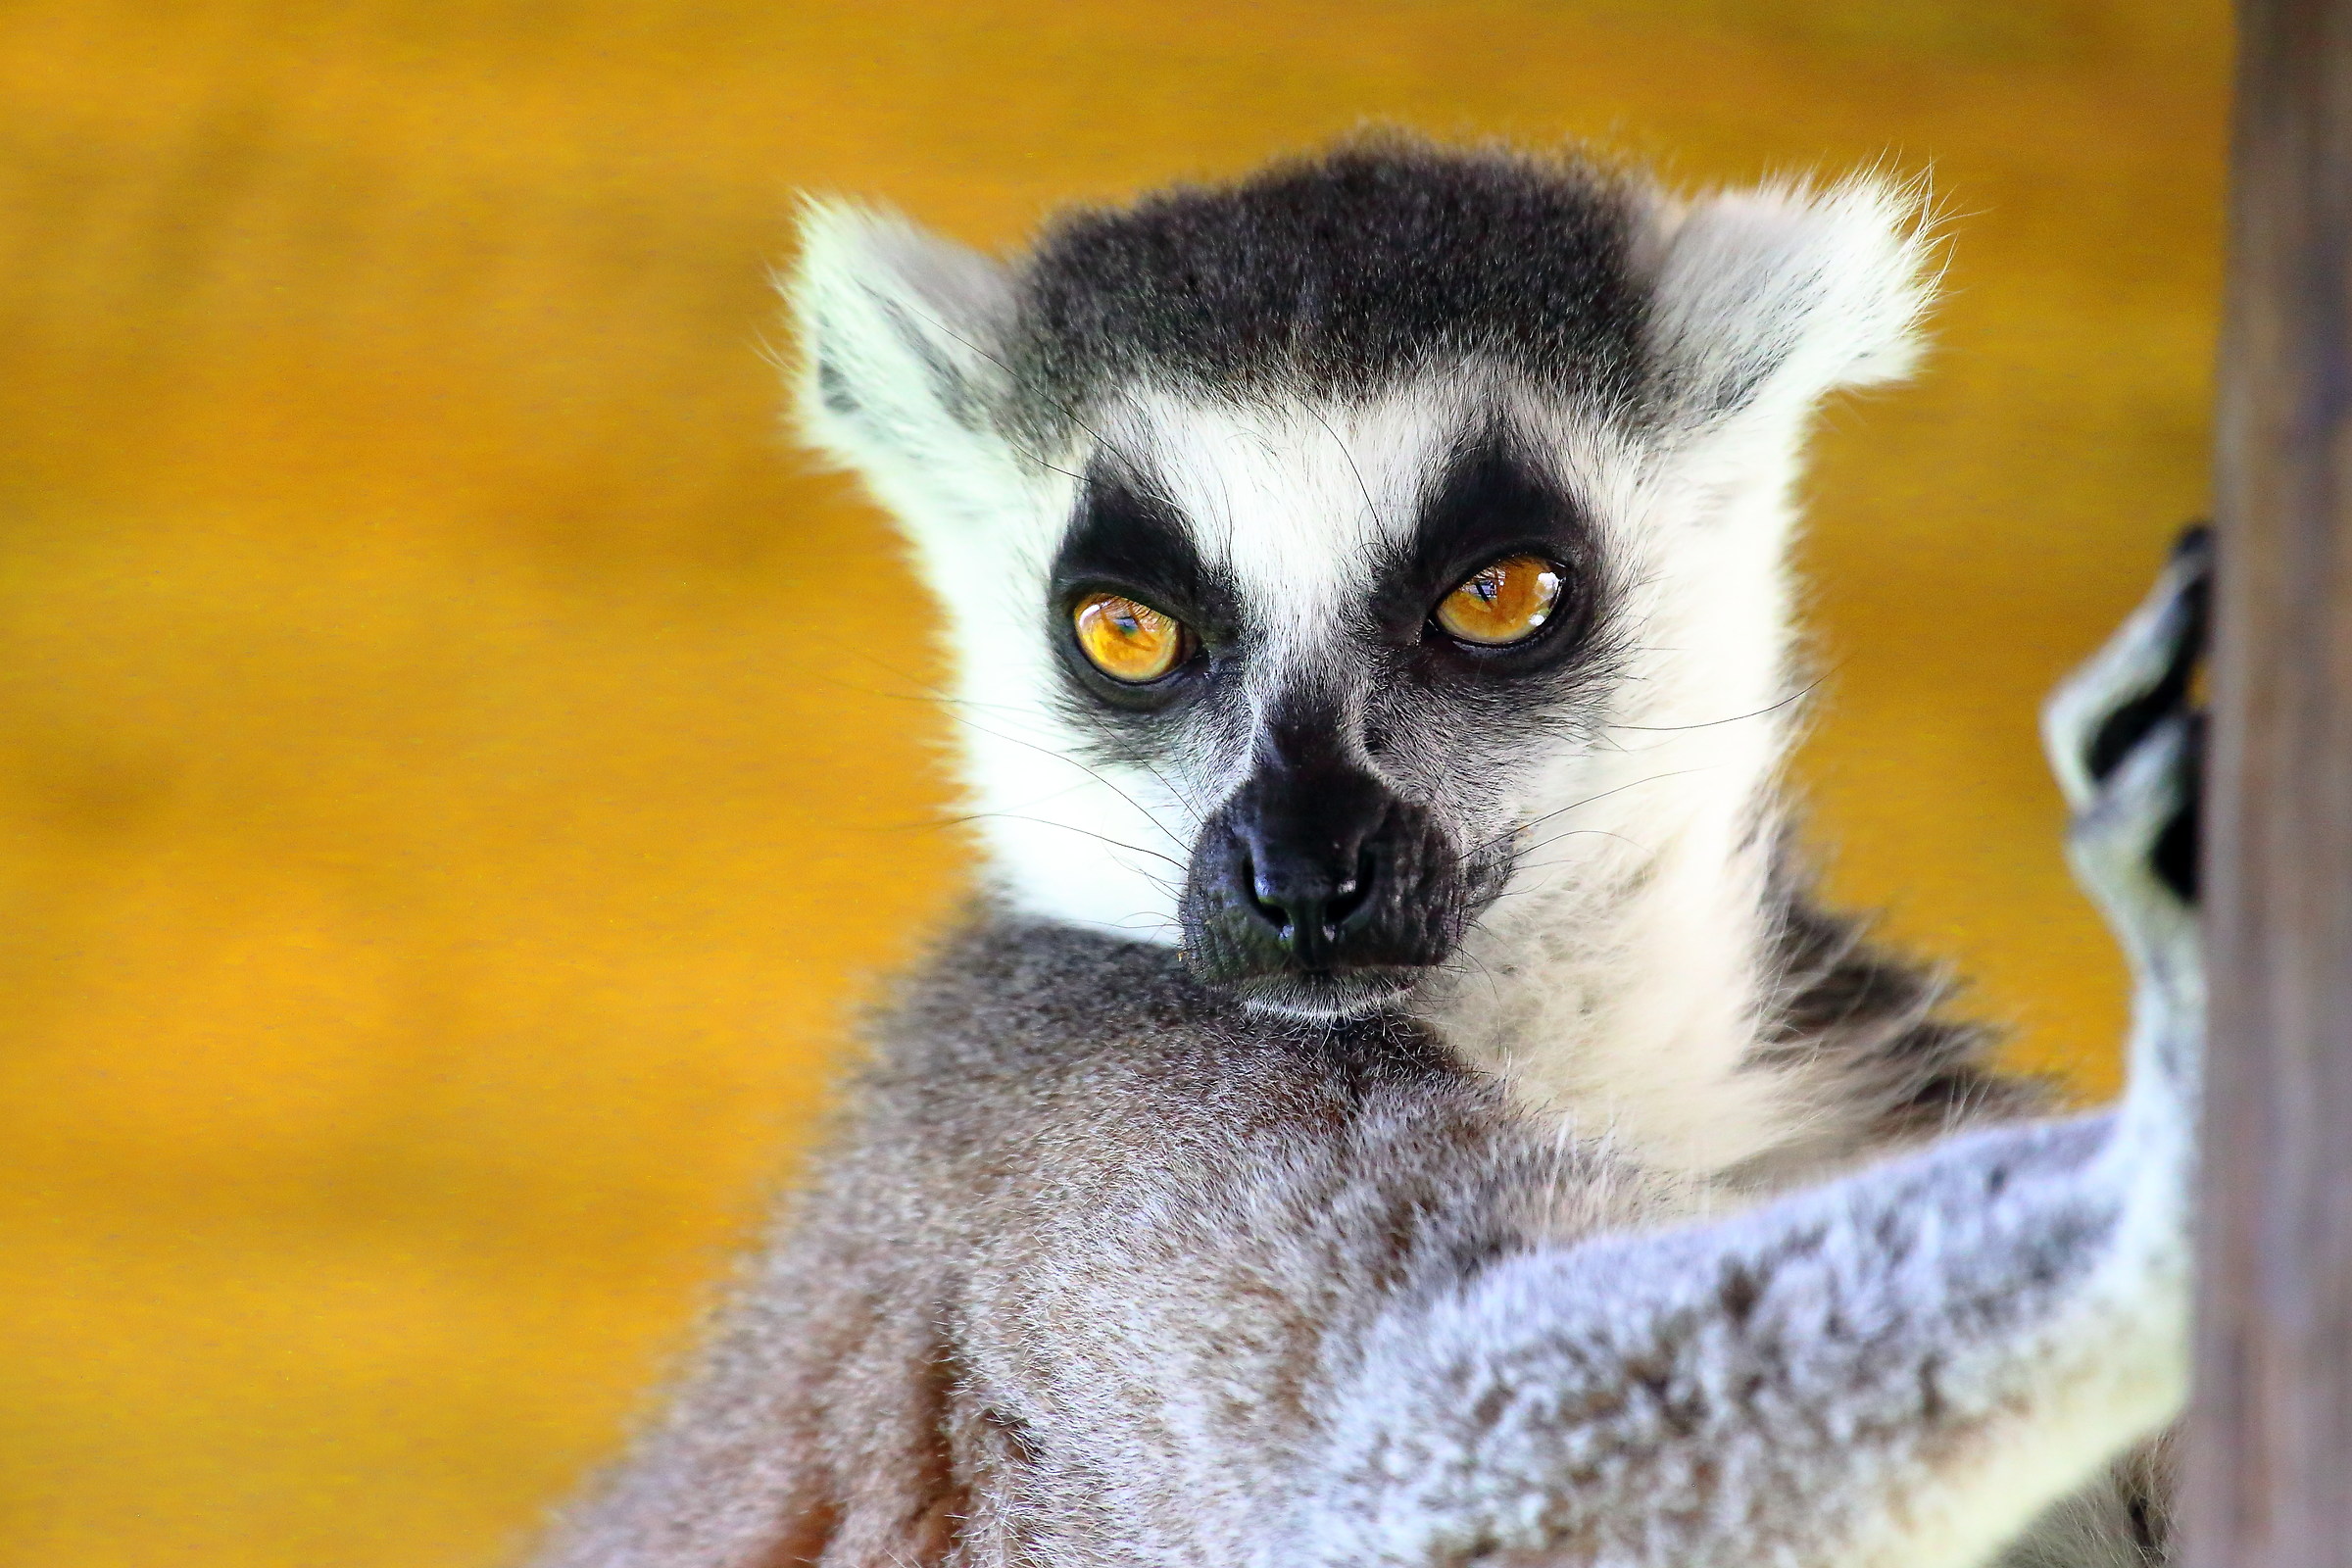 Pensive lemur...